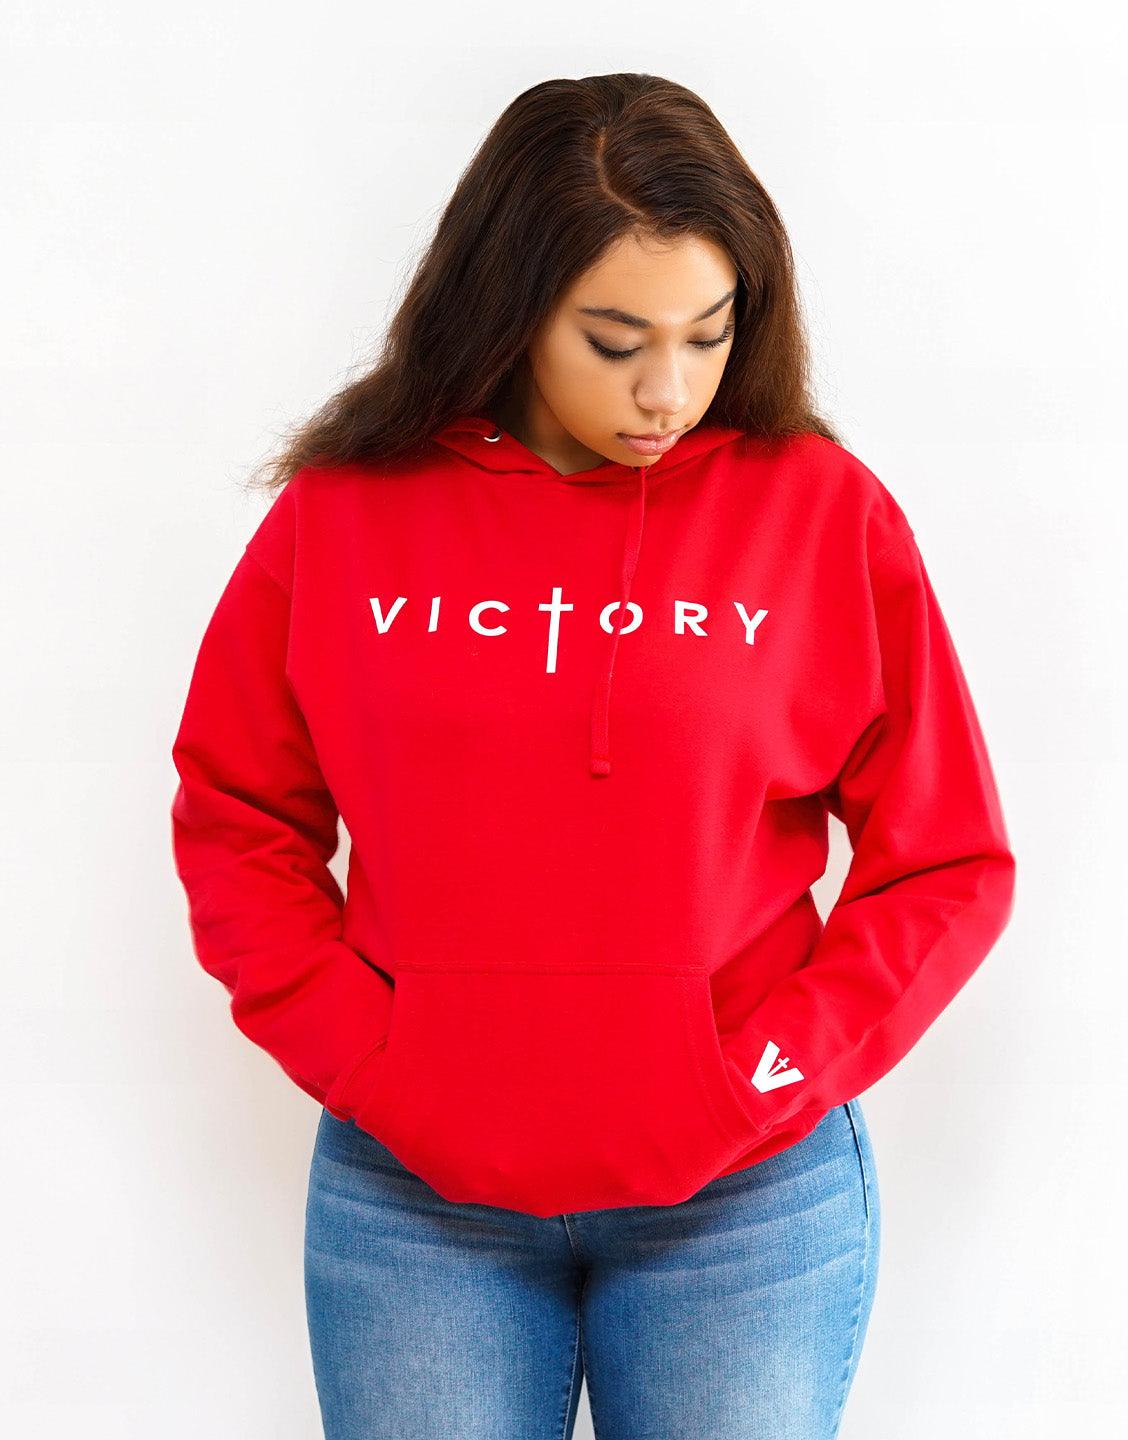 Victory Hoodie - Red - VOTC Clothing